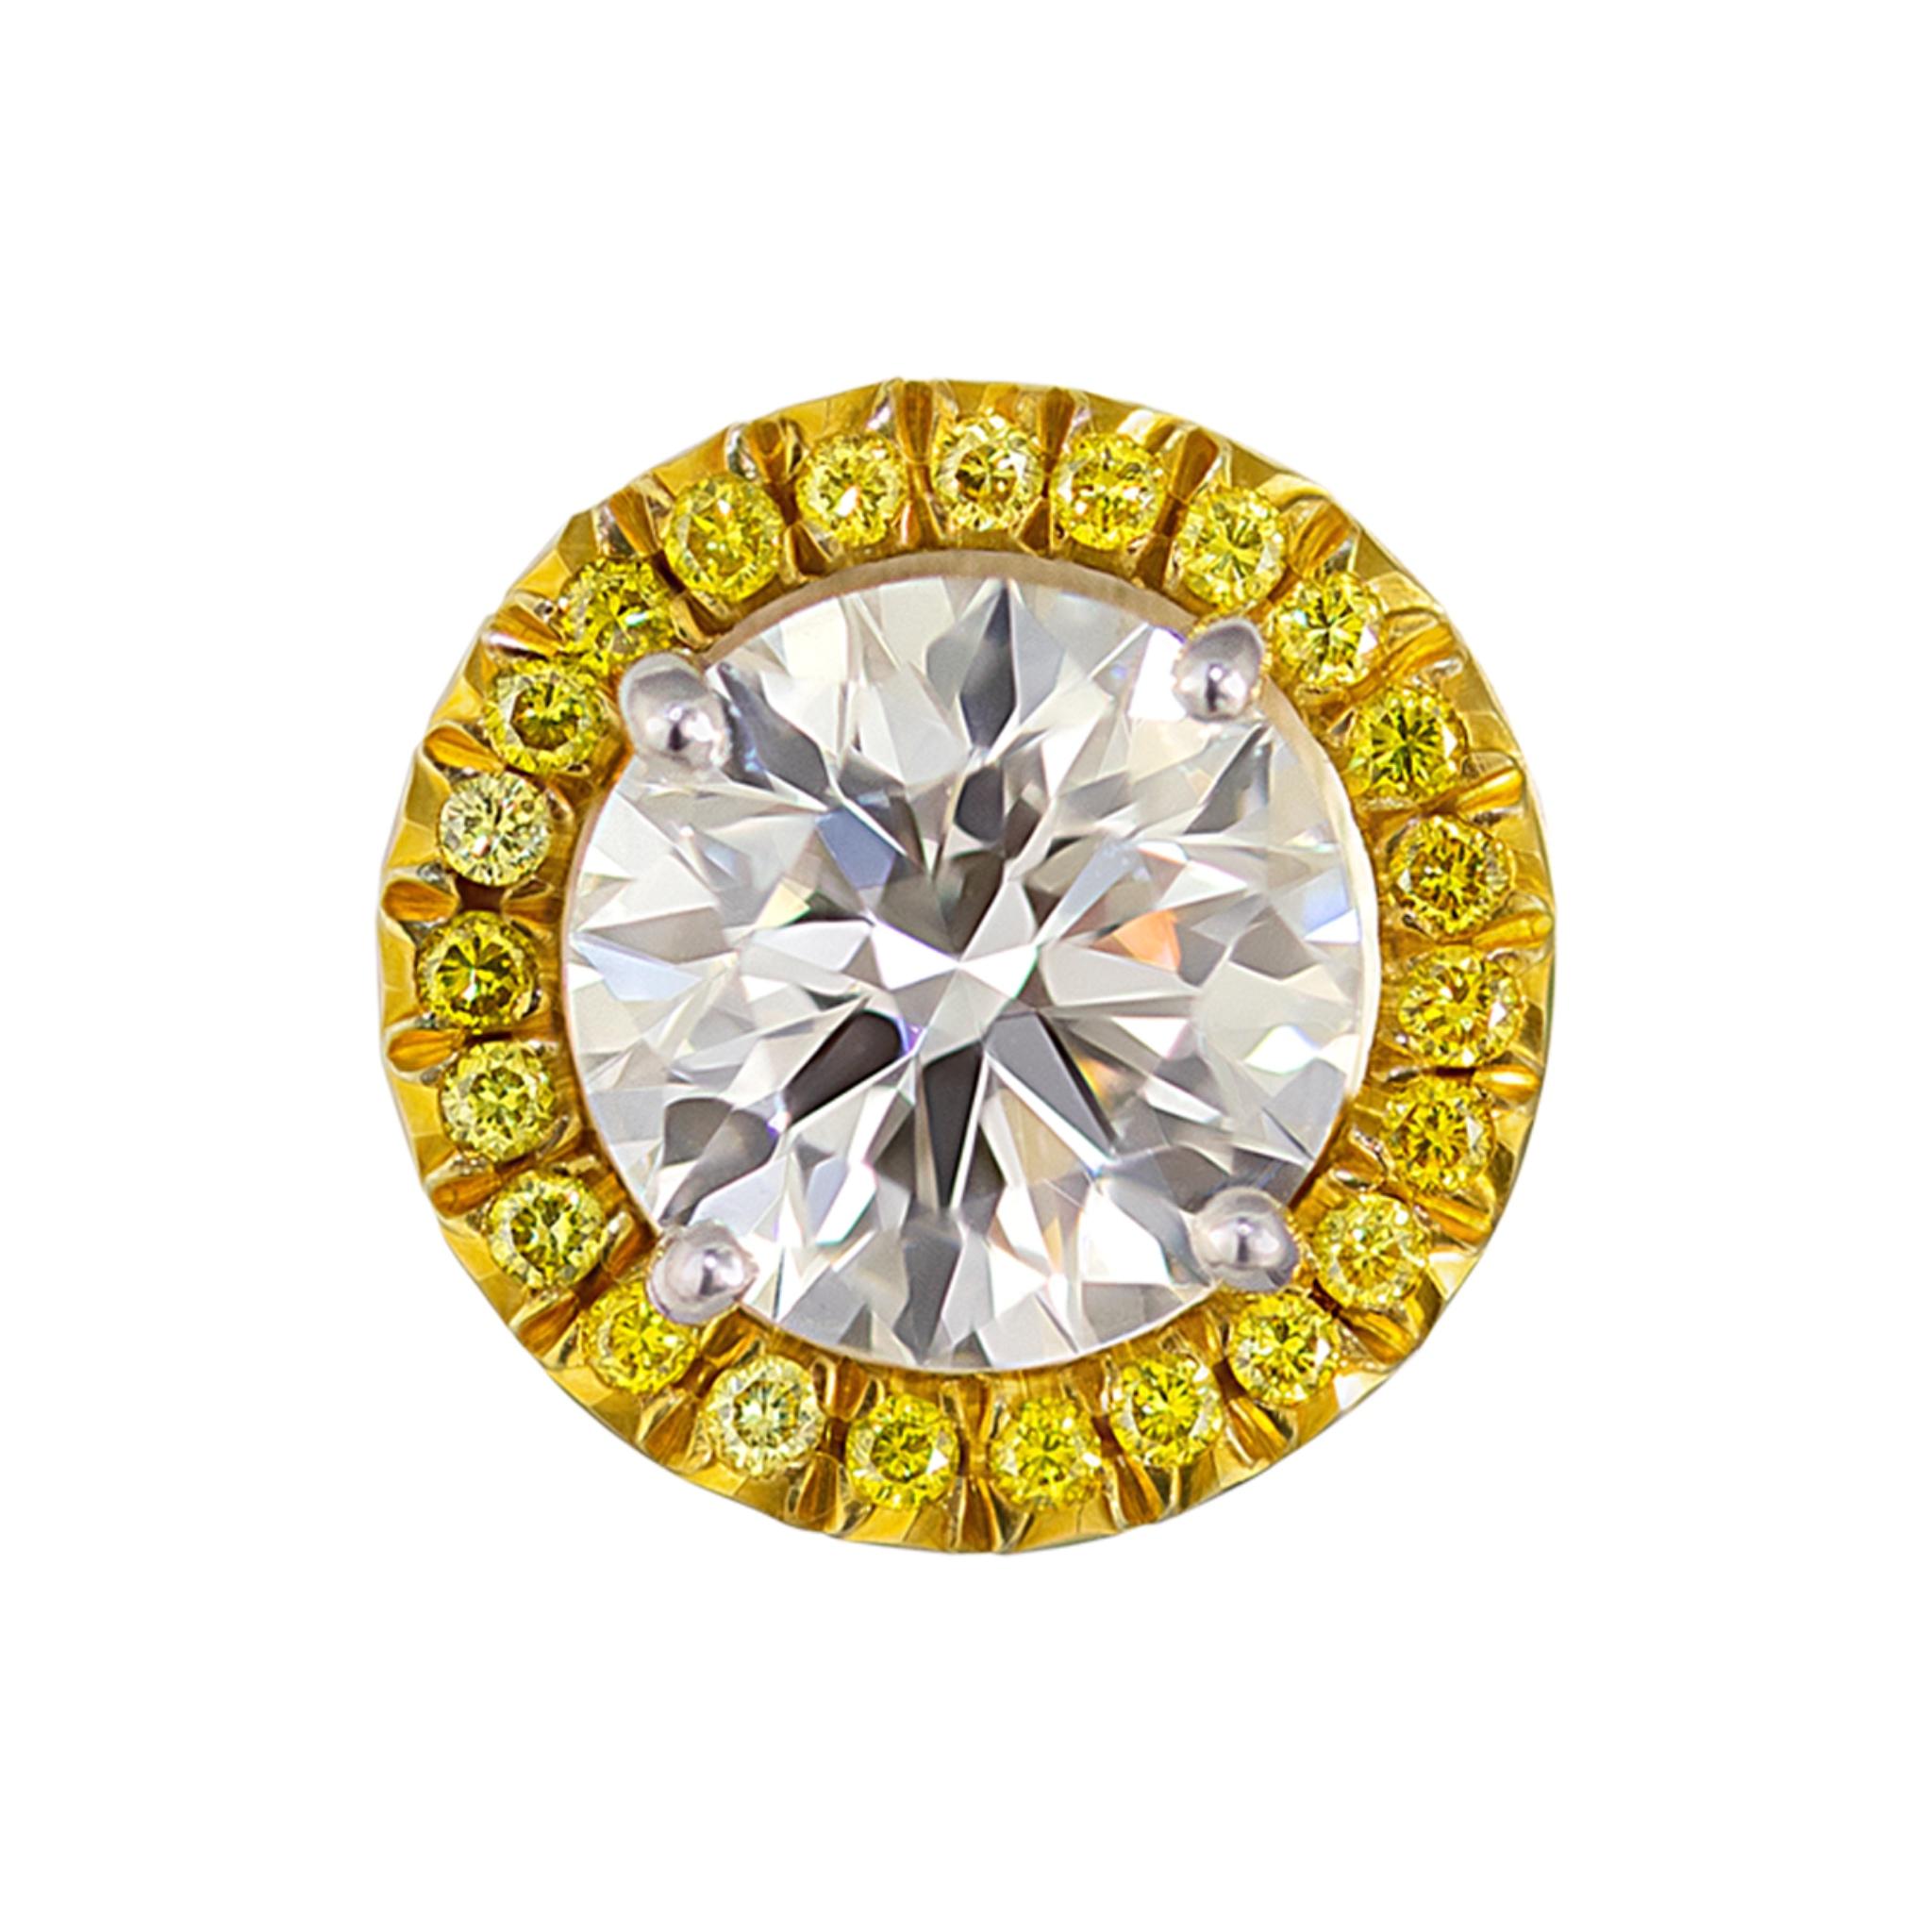 Graff 18K Yellow Gold Diamond Clip-on Earrings
2 GIA Diamonds: 2.05ct & 2.01ct
2.05ct Diamond GIA Report: 15126487
2.01ct Diamond GIA Report: 15126458
E-color, VS1 clarity
Yellow Diamonds: 0.32ctw
SKU: GRAFF01075
Retail price: $211,000.00